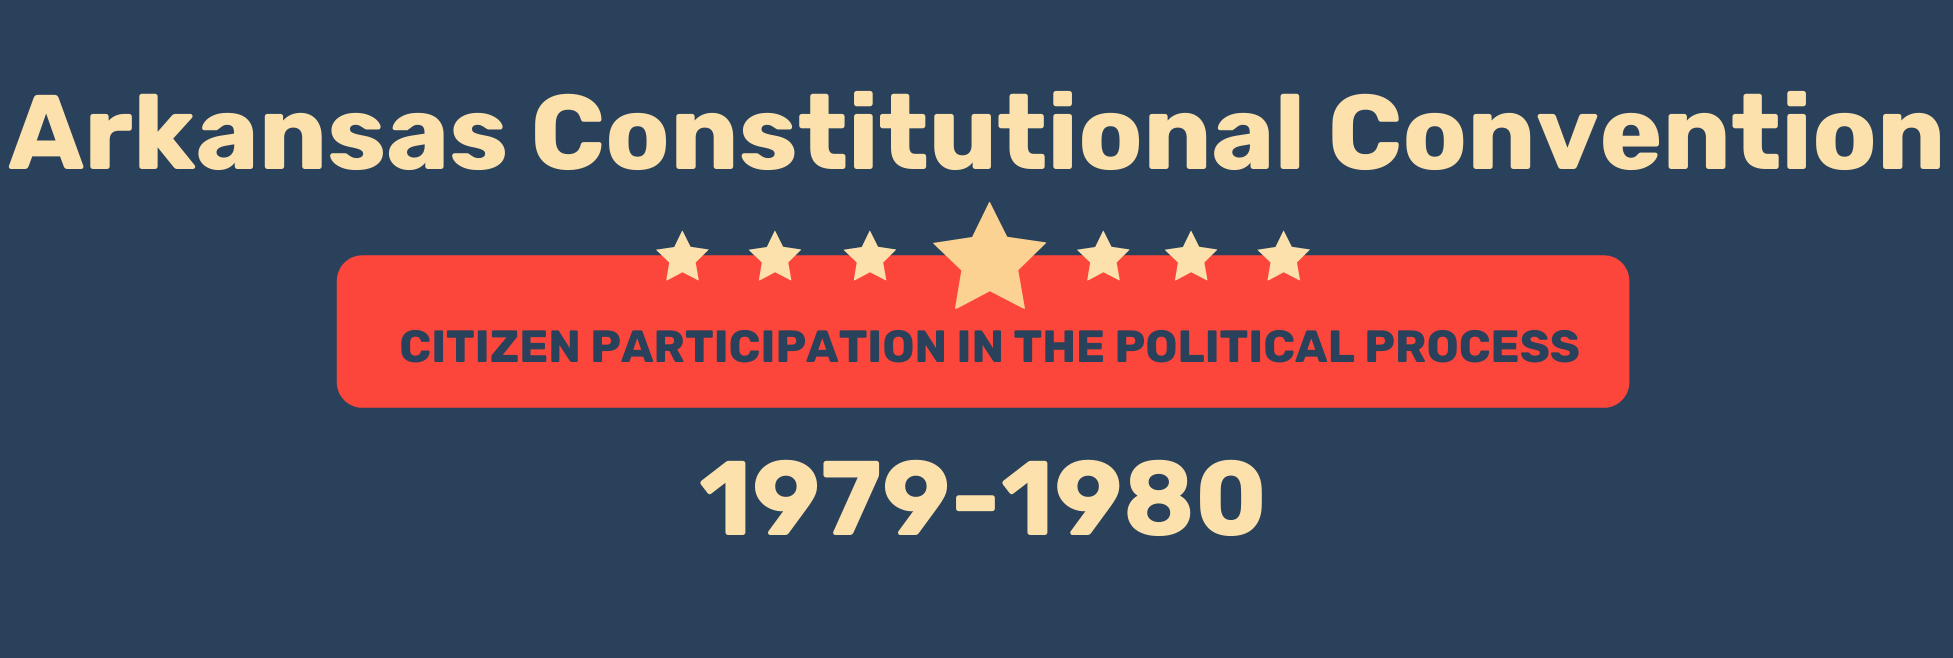 Arkansas Constitutional Convention 1979-1980: Citizen Participation in the Political Process